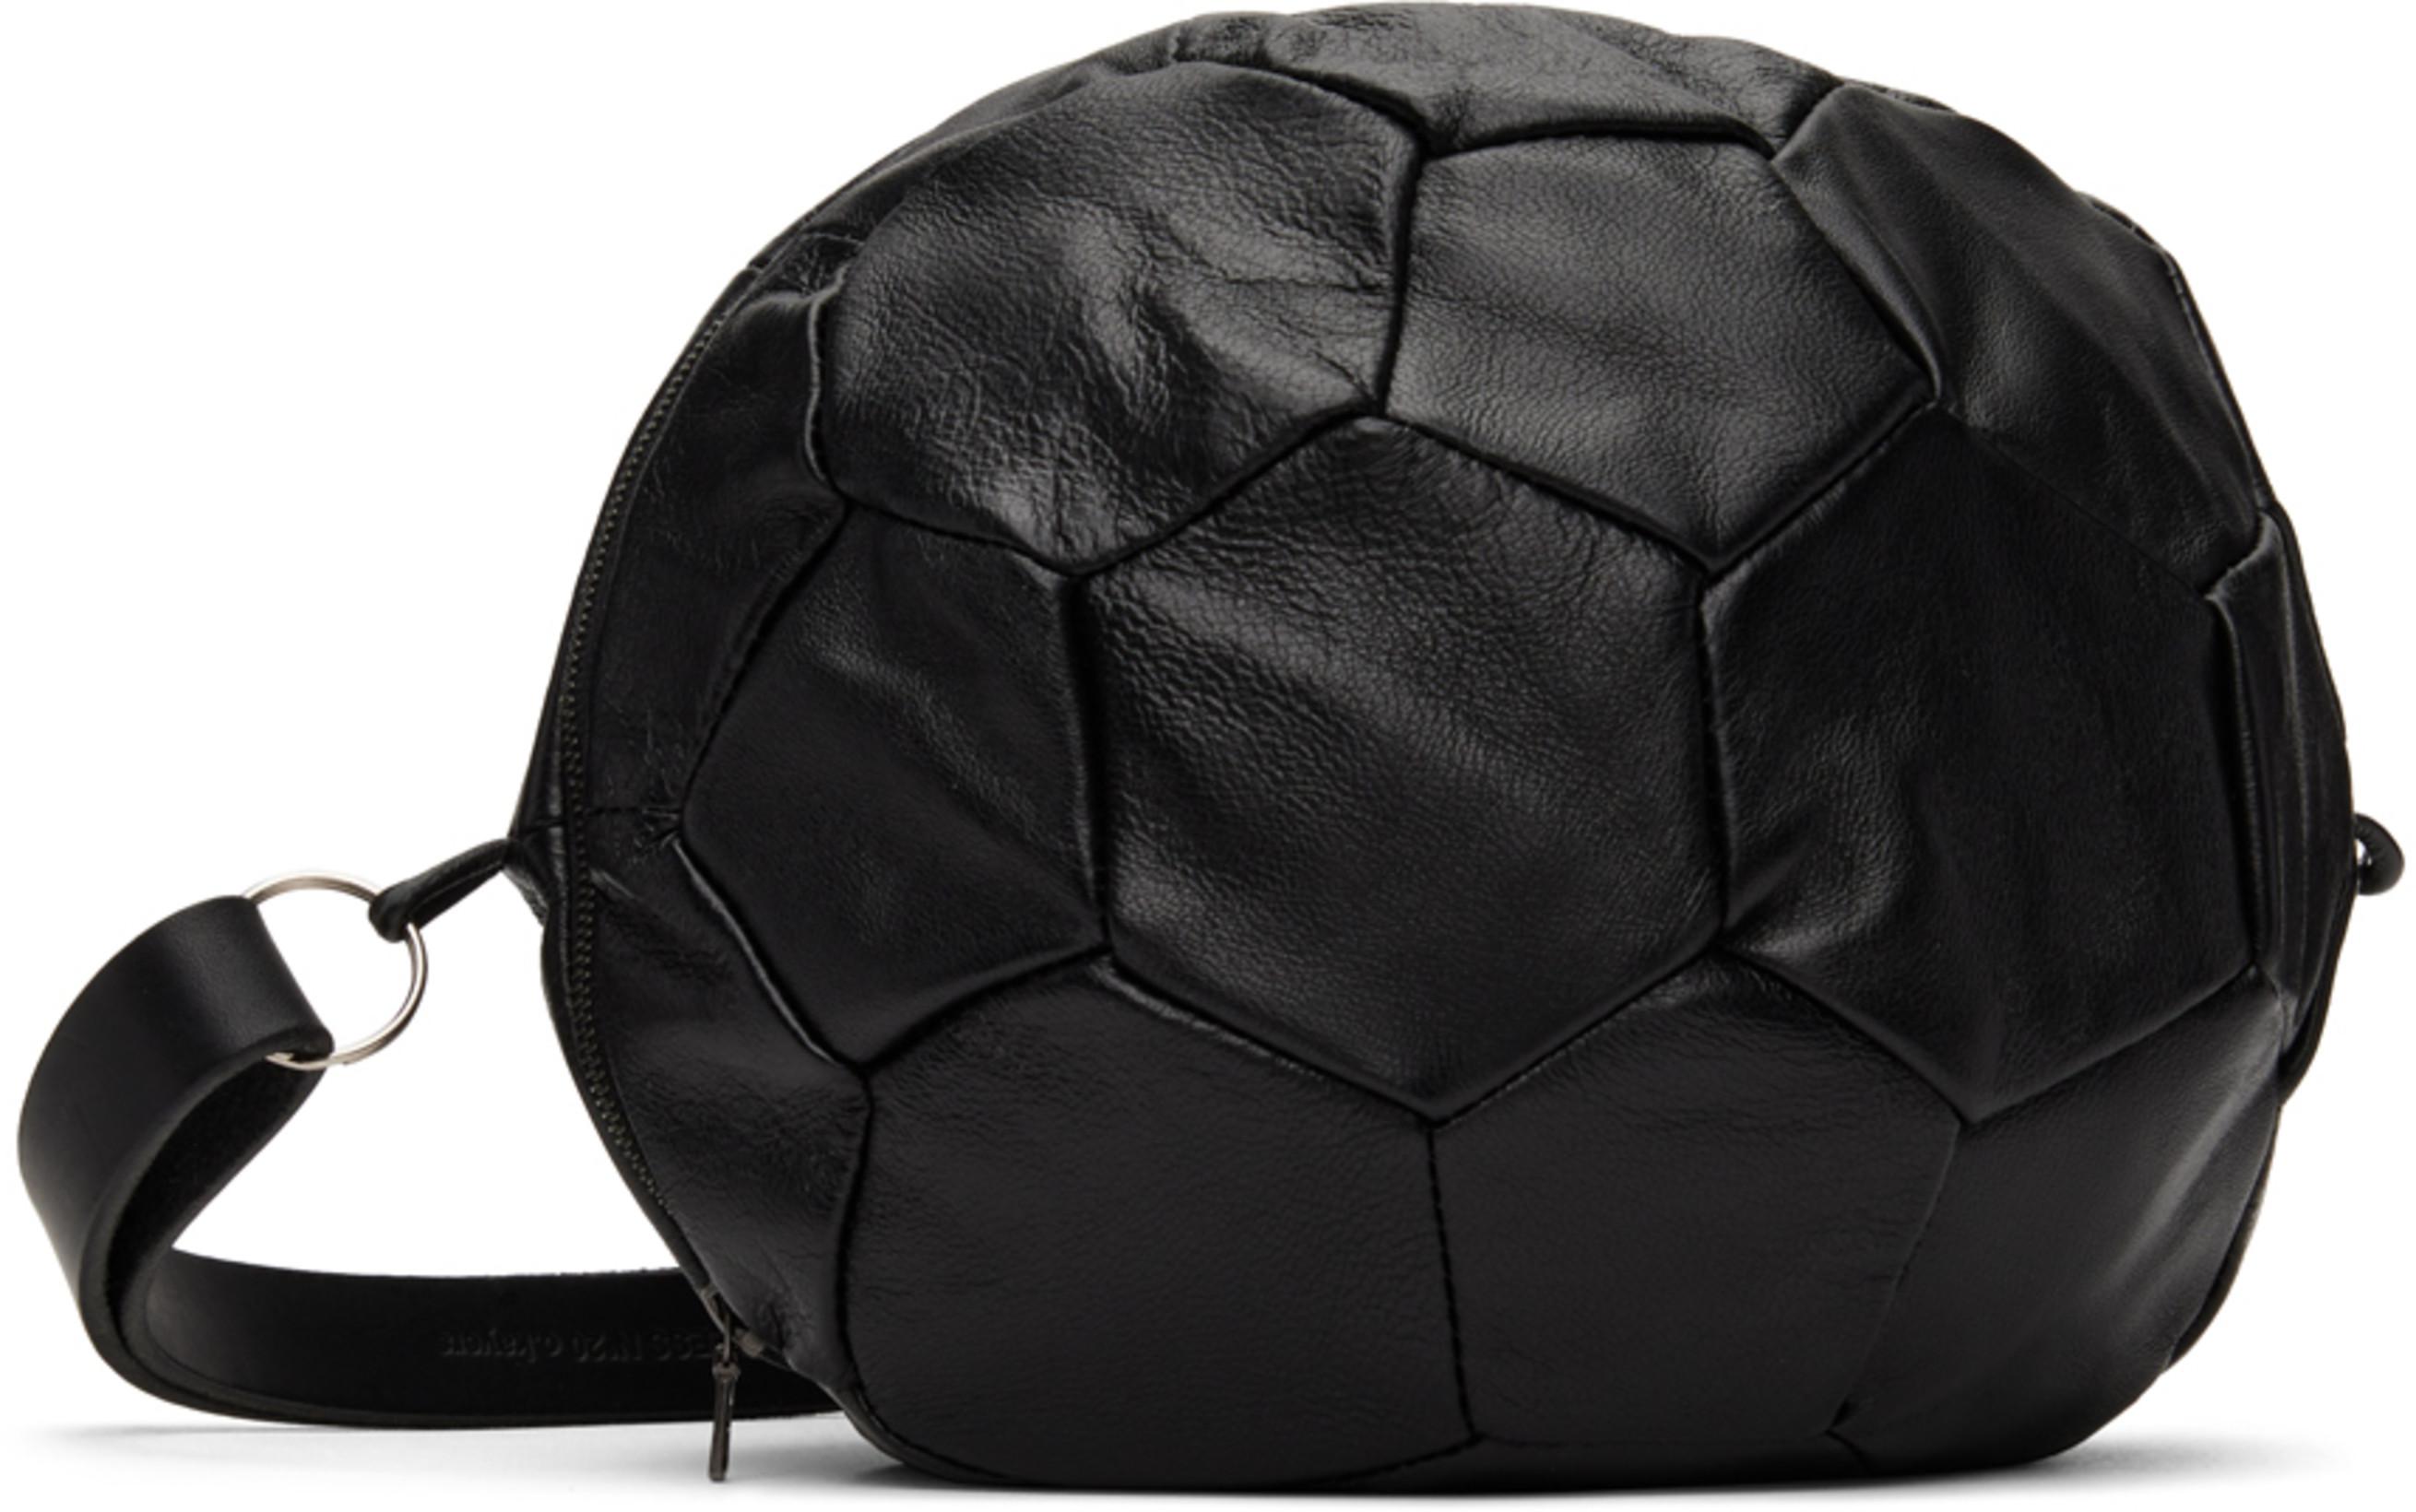 Black Football Bag by BLESS